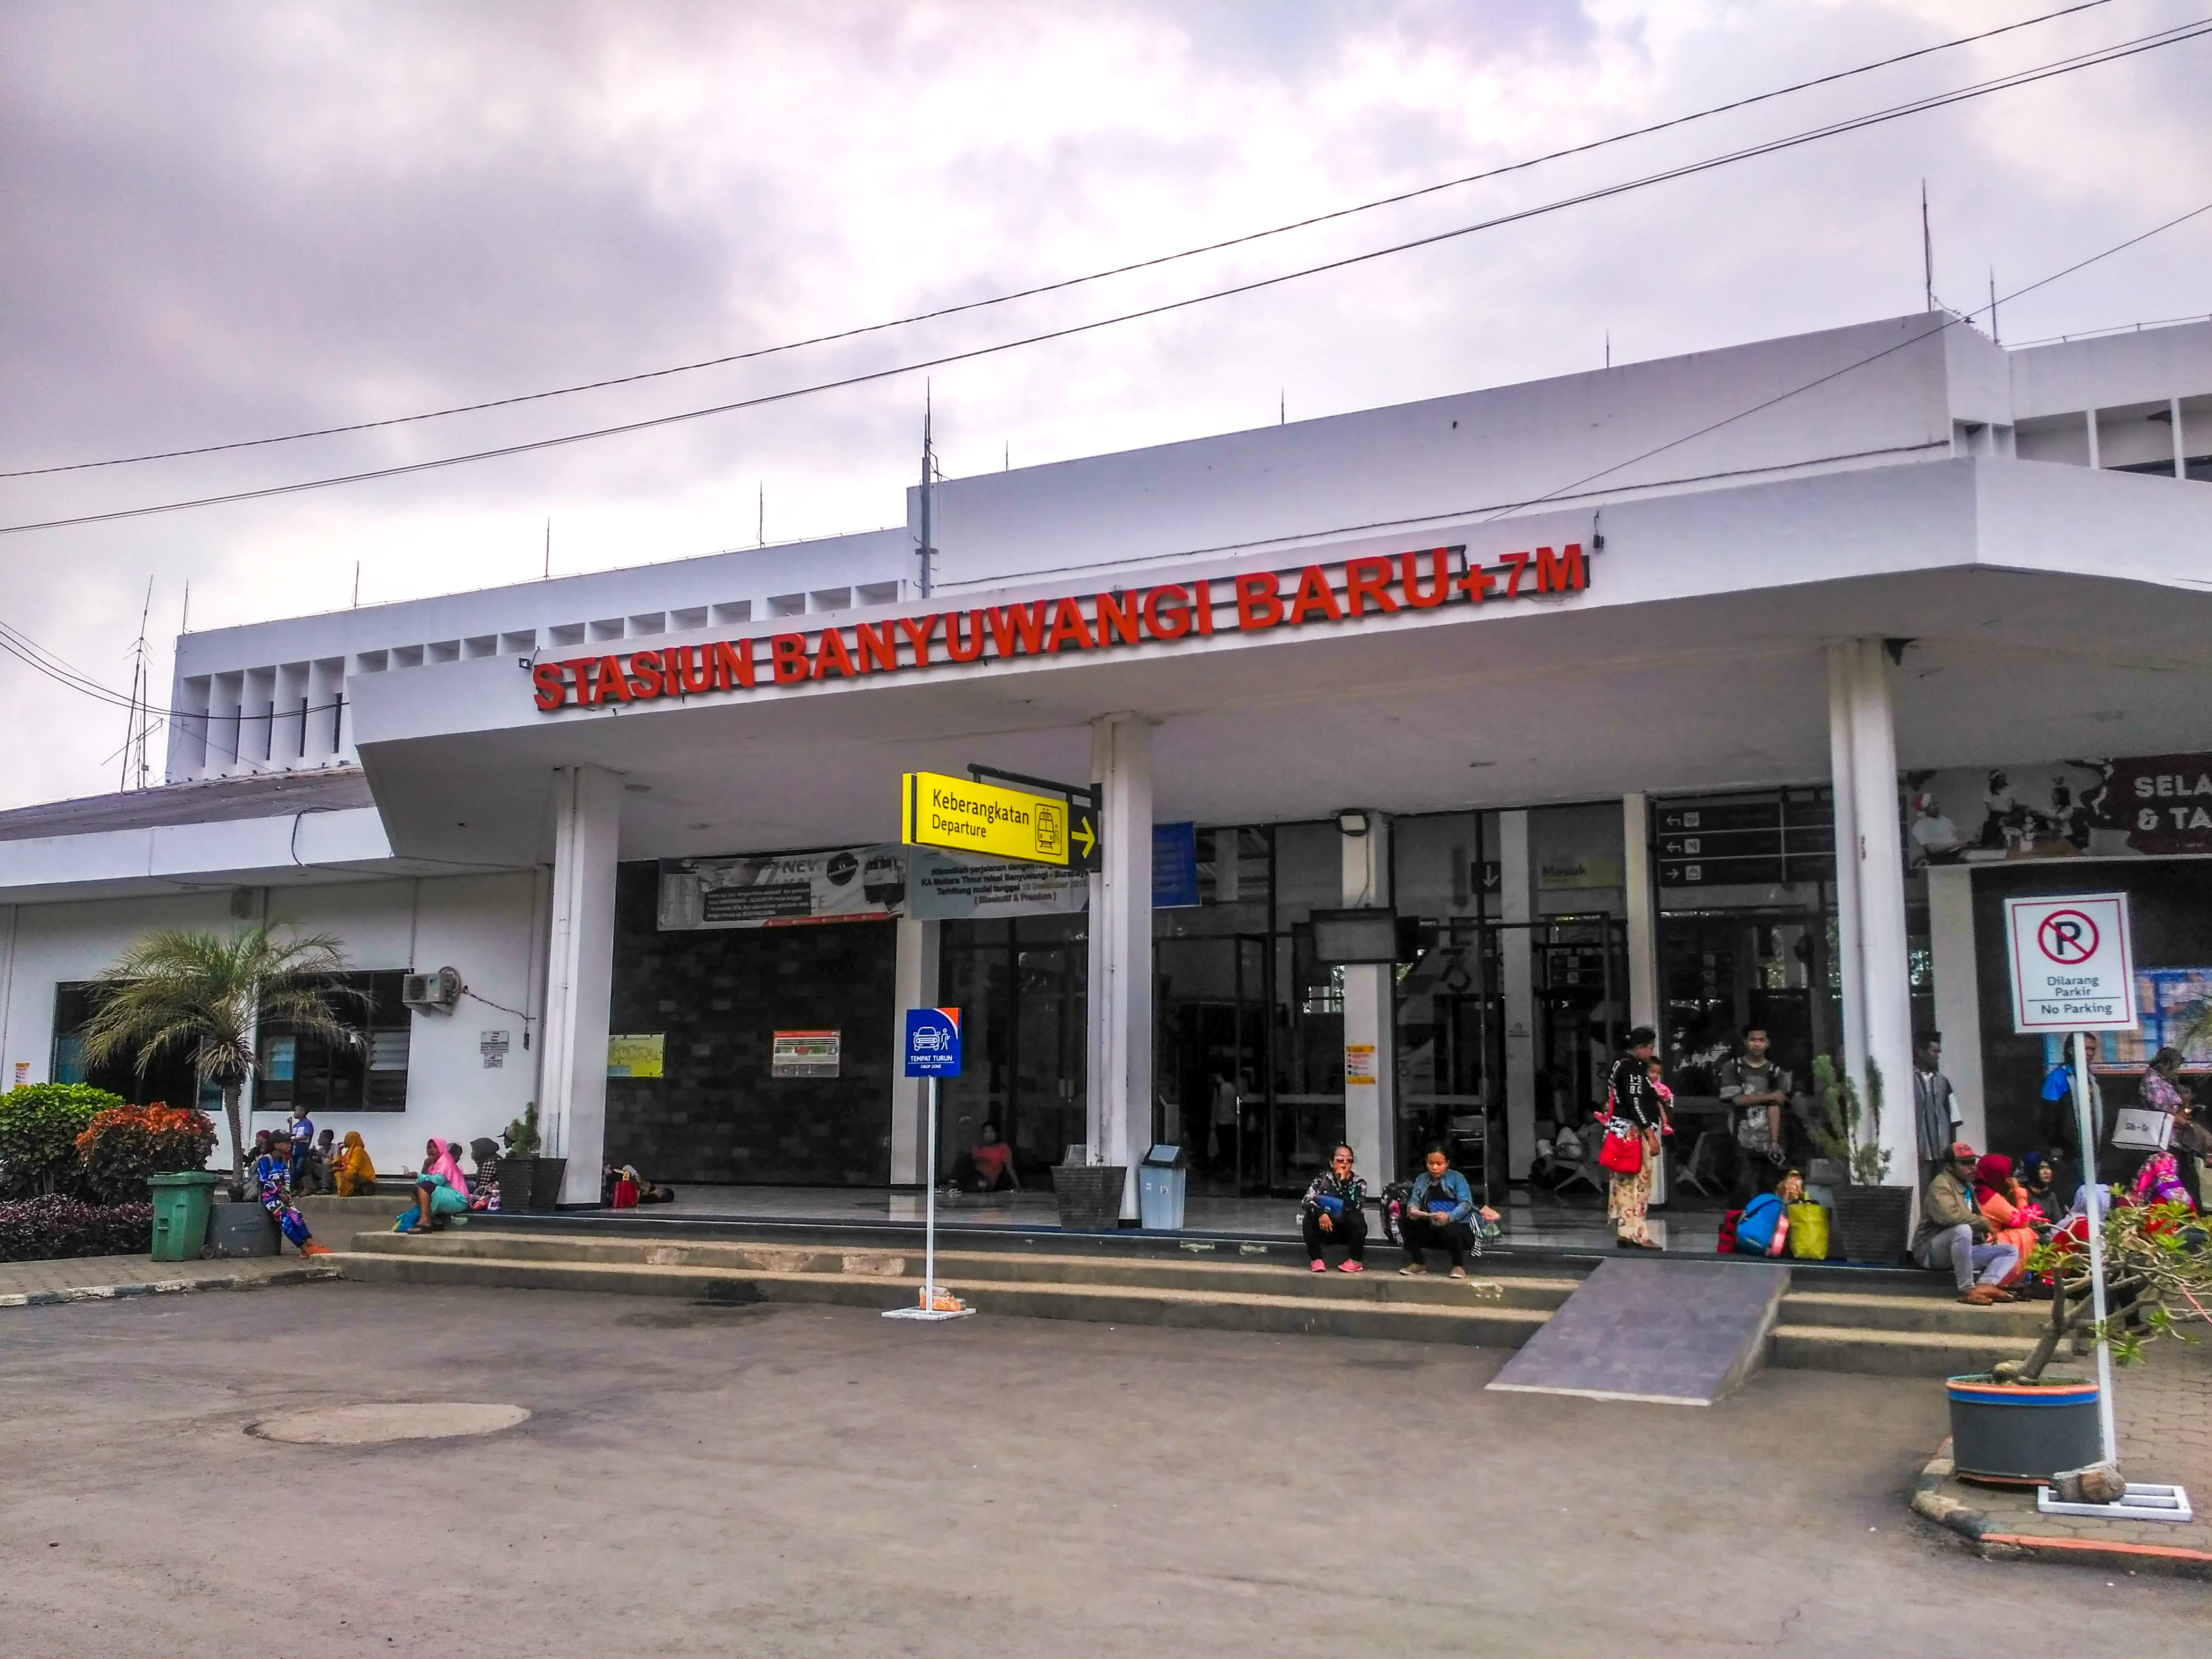 Stasiun Banyuwangi Baru (c) Yudi Rahmatullah / Travelingyuk